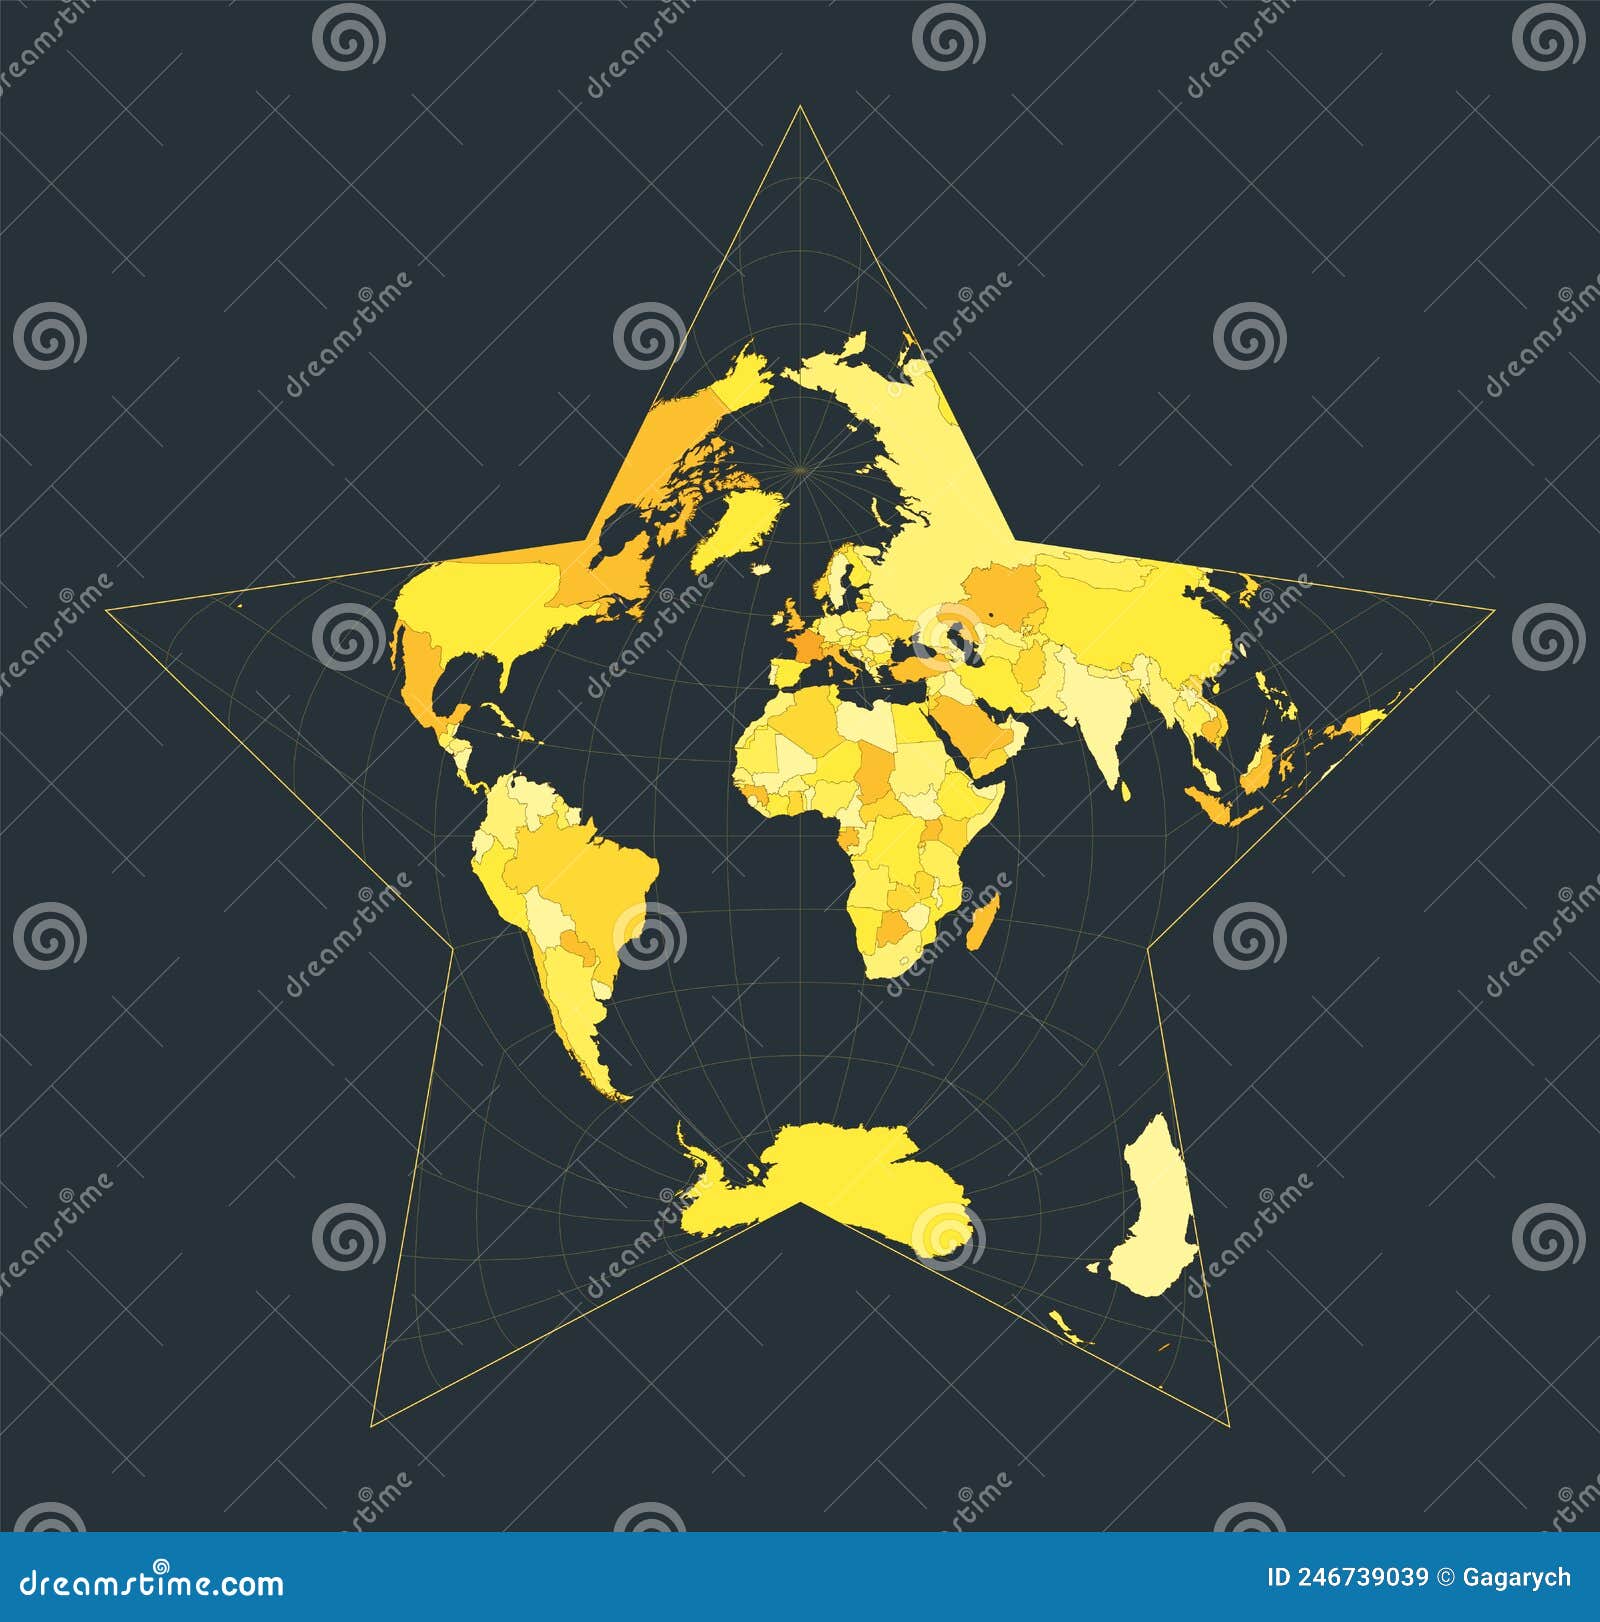 world map. berghaus star projection.